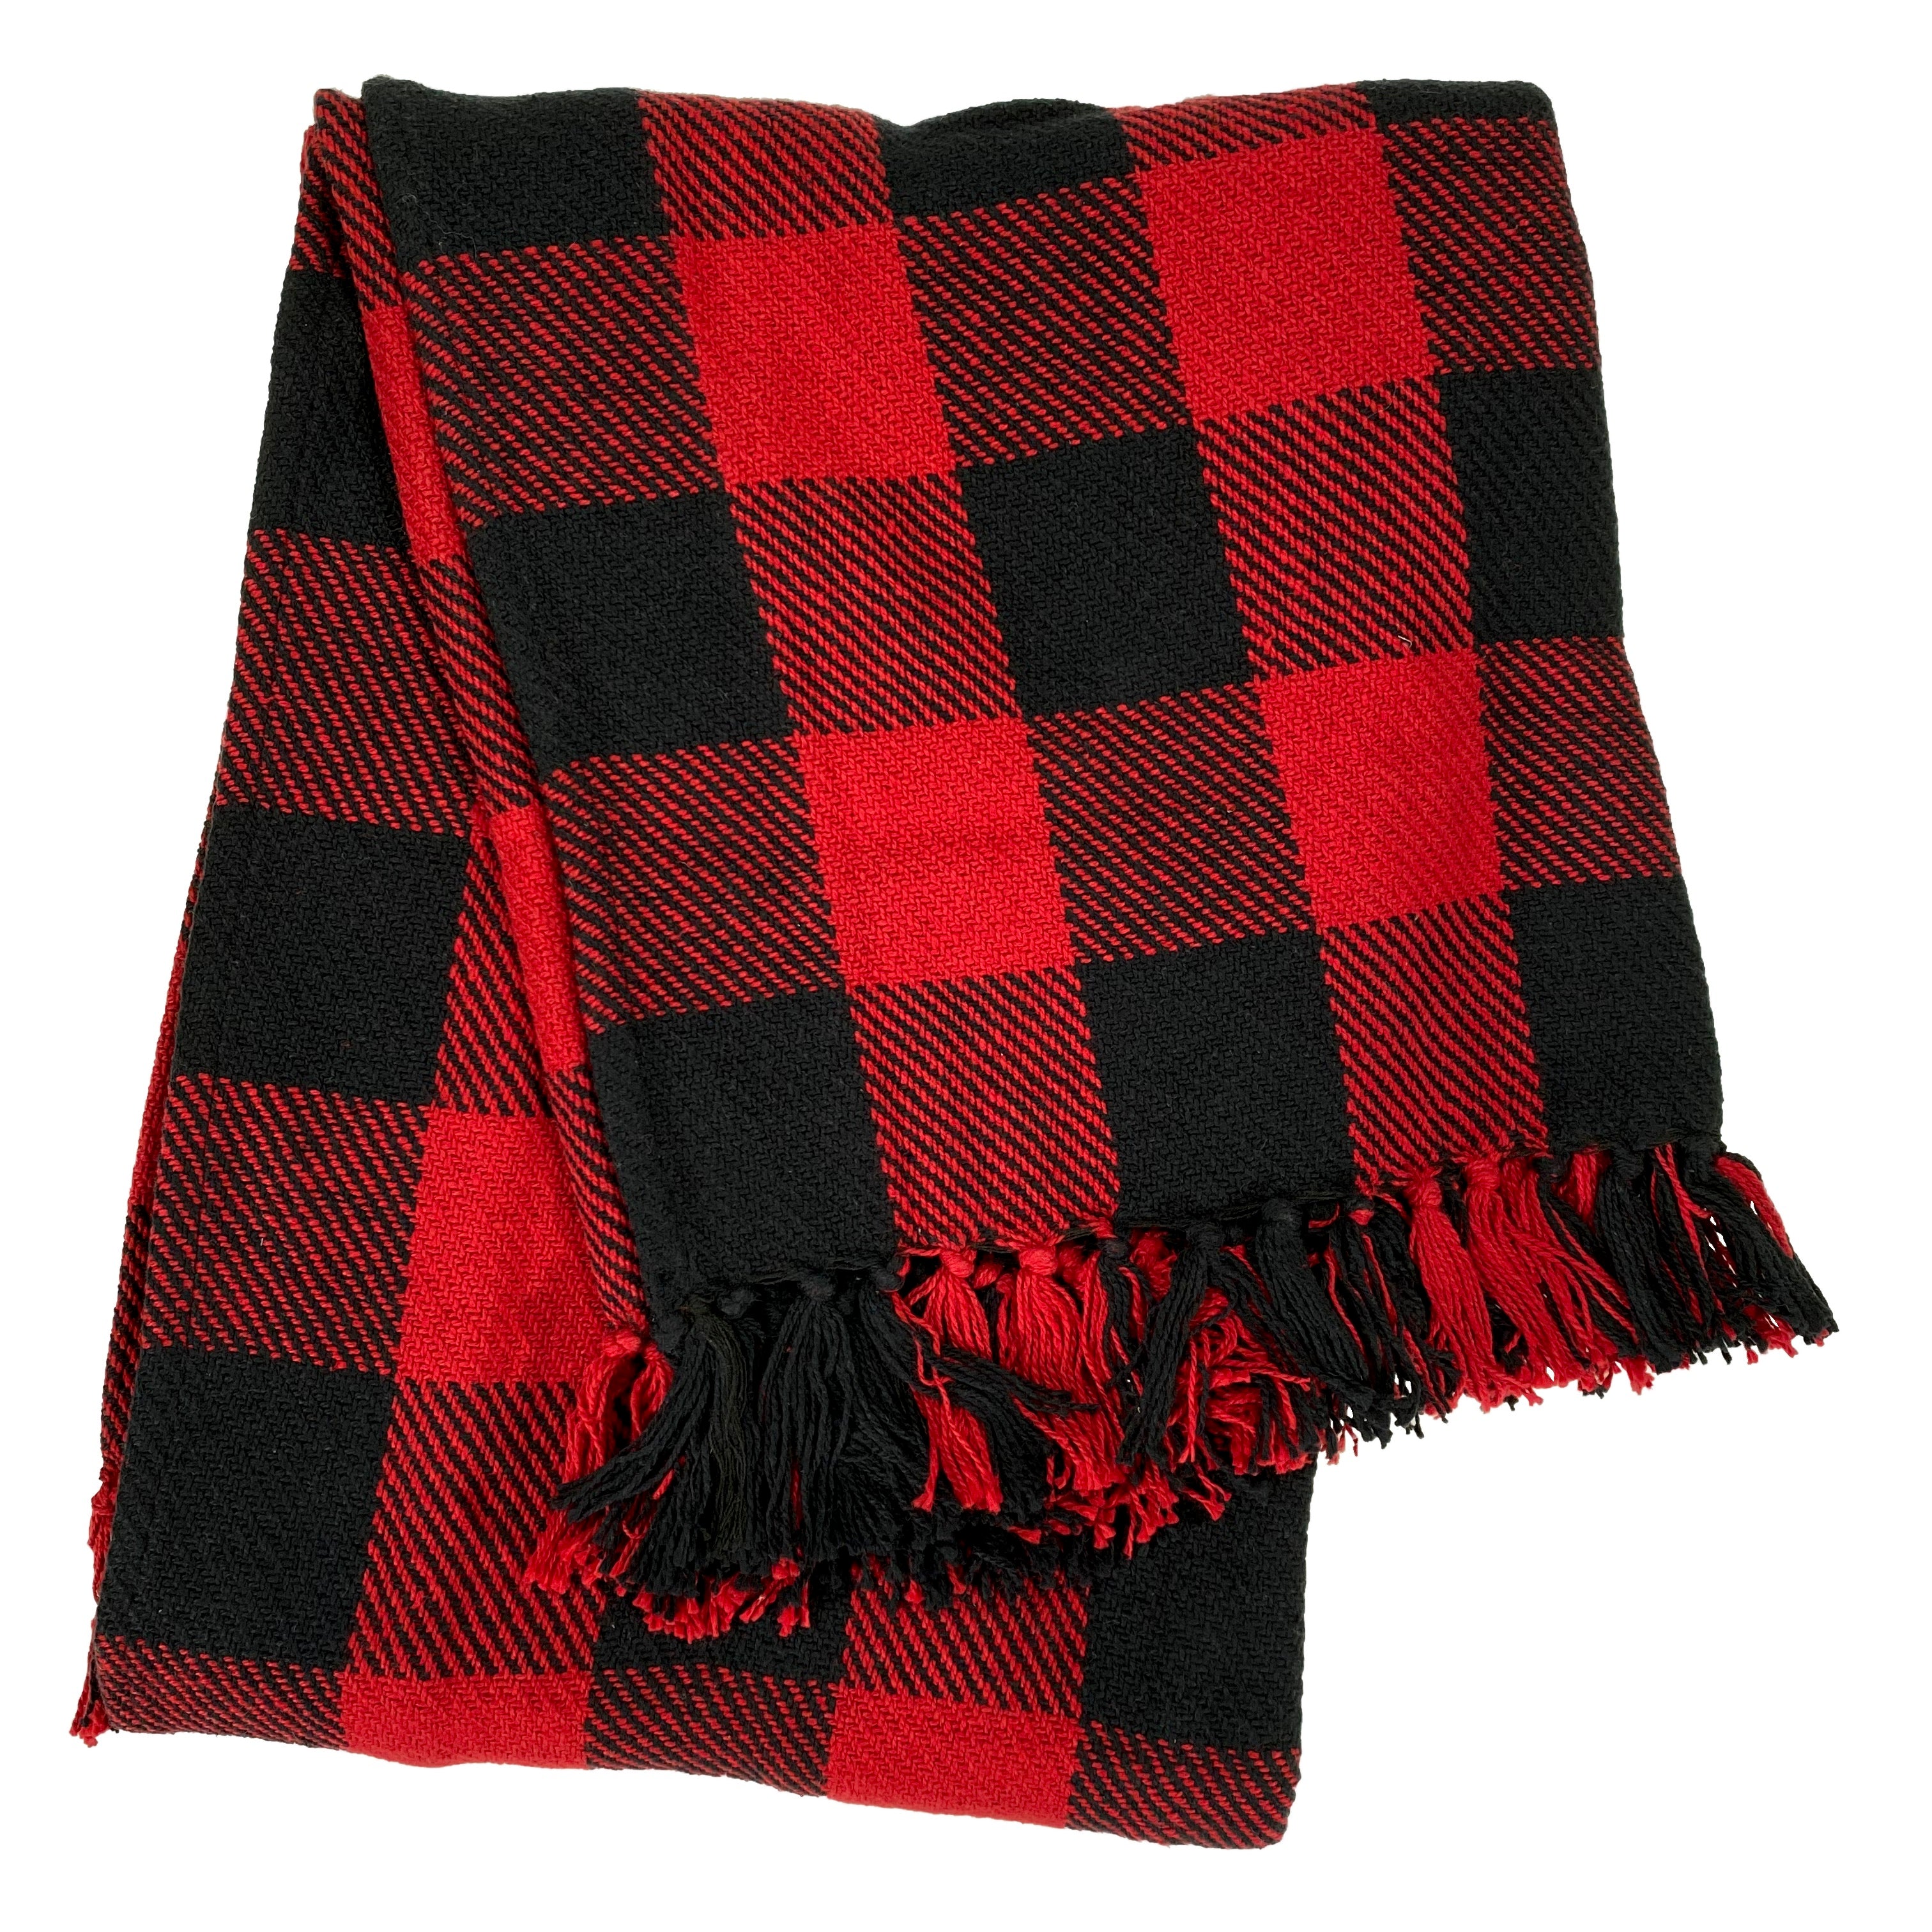 Black and Red Franklin Plaid Blanket    